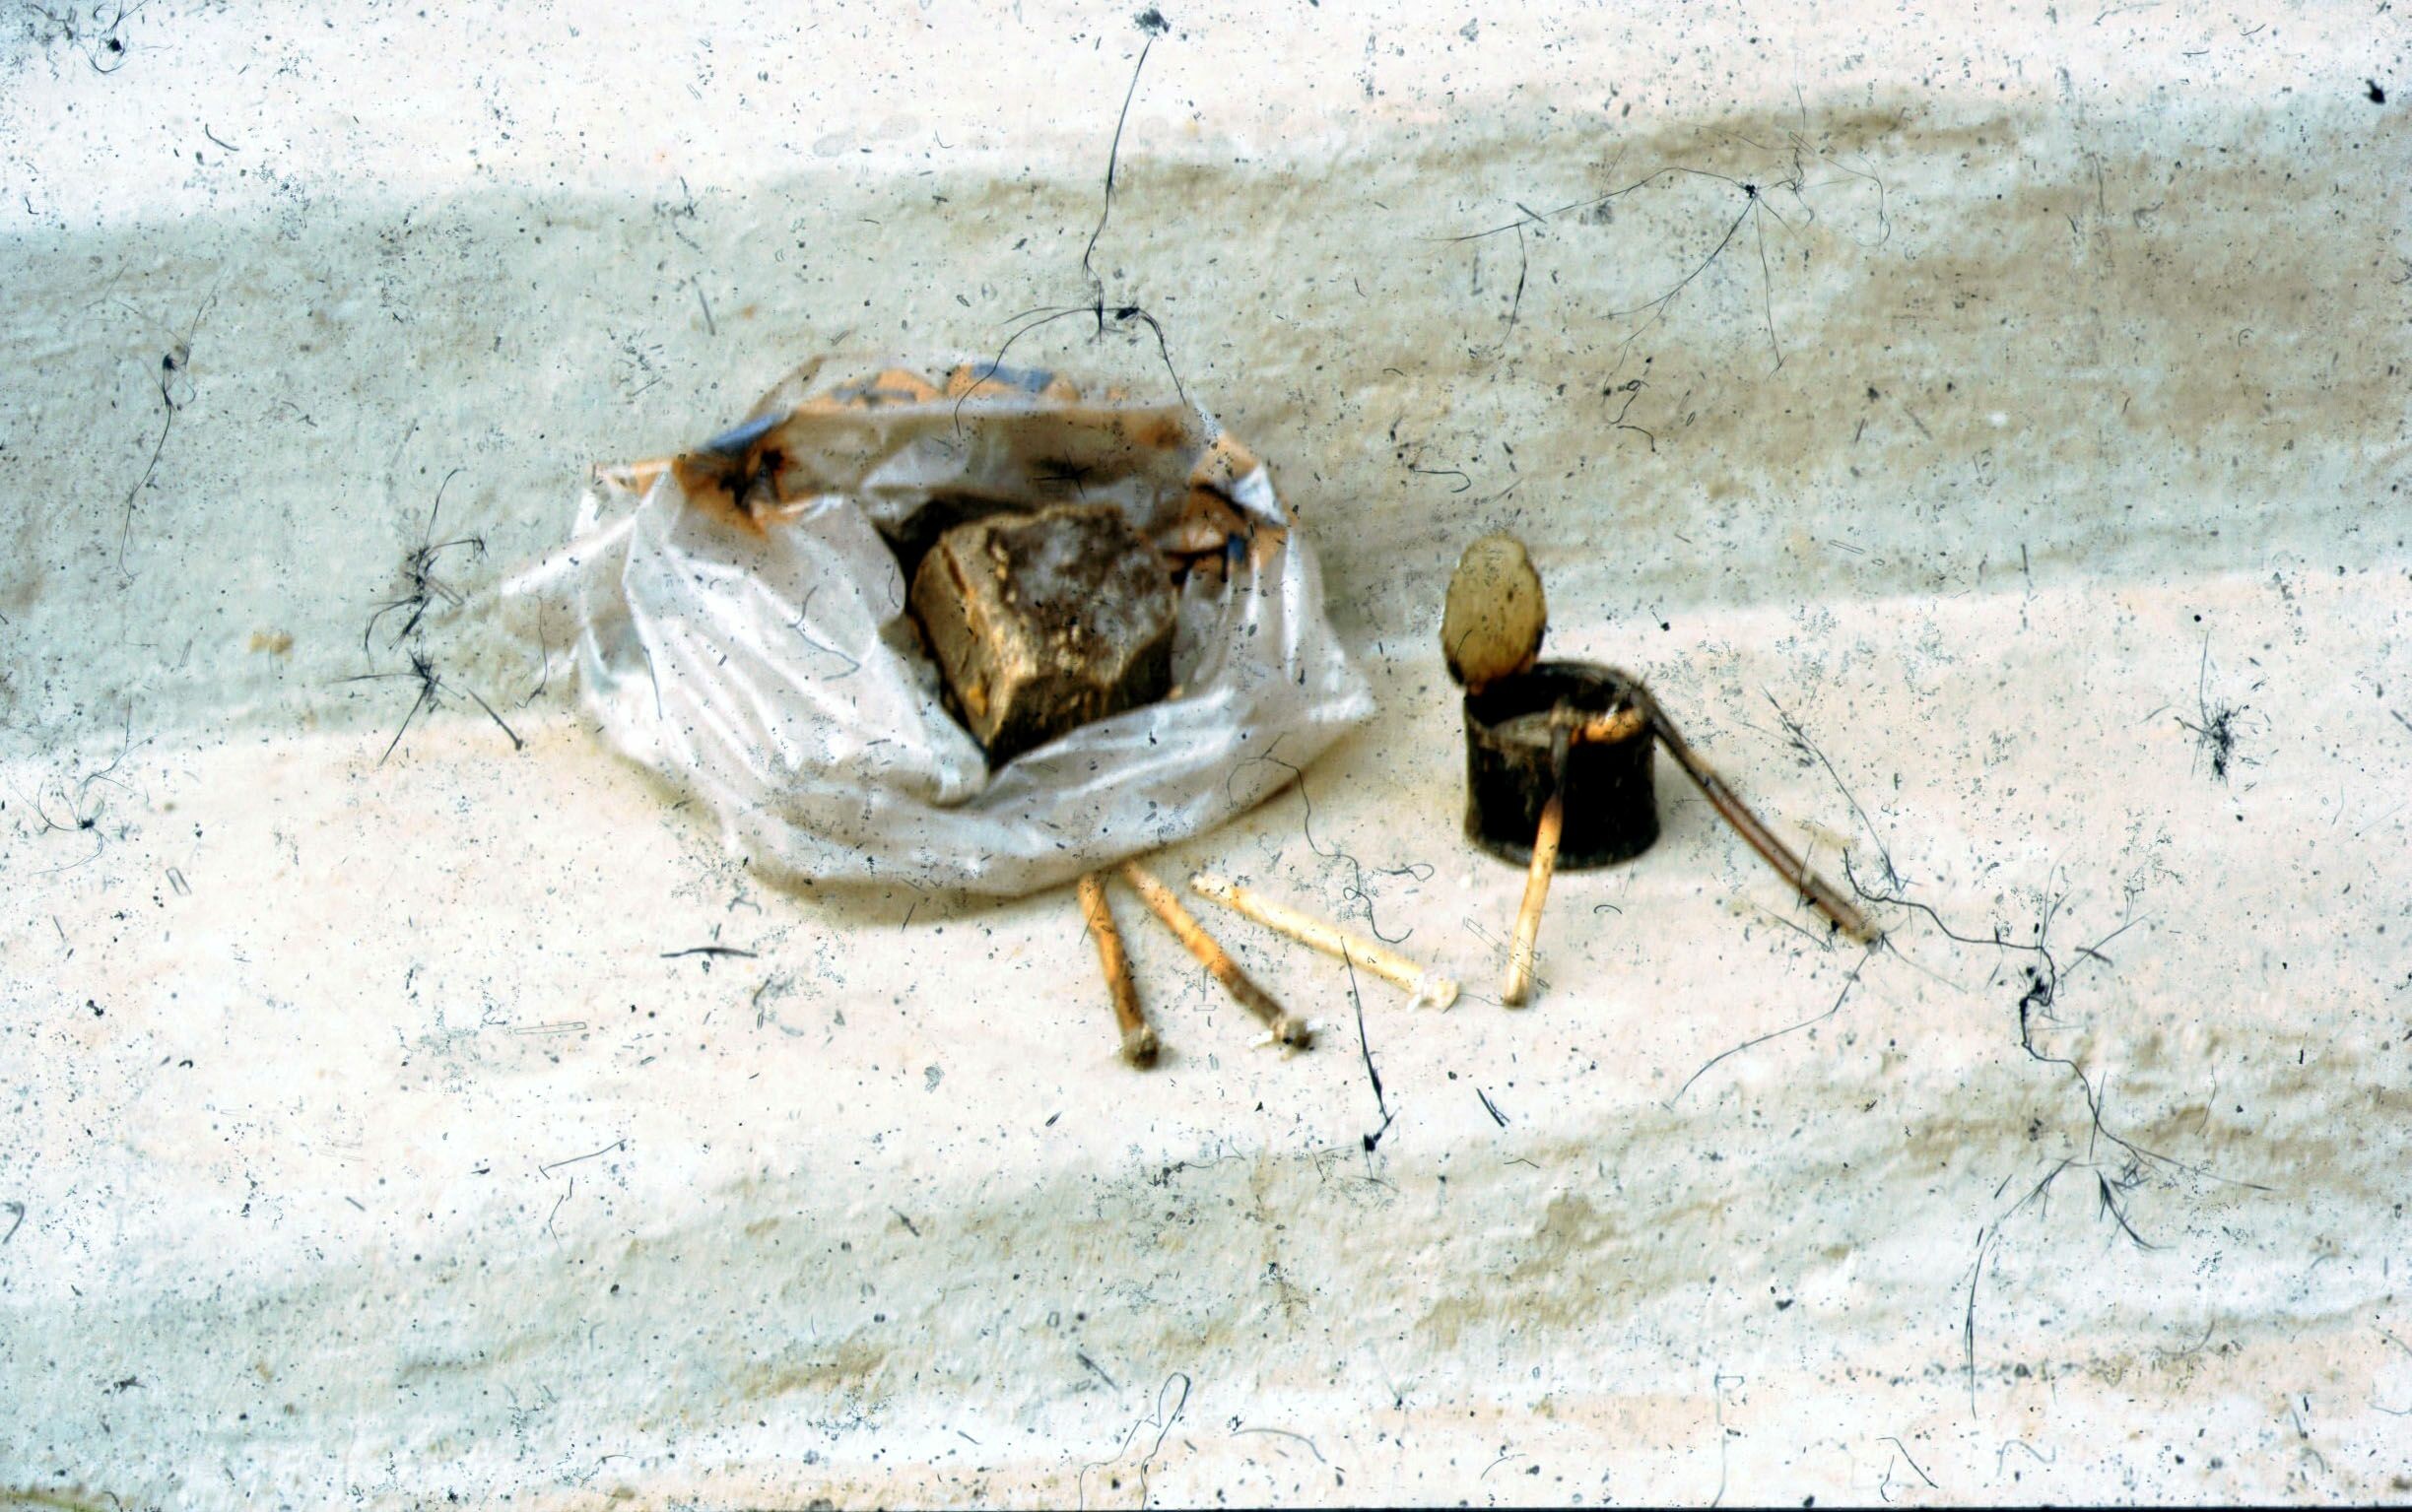 Tojásfestő eszközök (gica, viasz), Németh Rozália, Vése (Rippl-Rónai Múzeum CC BY-NC-ND)